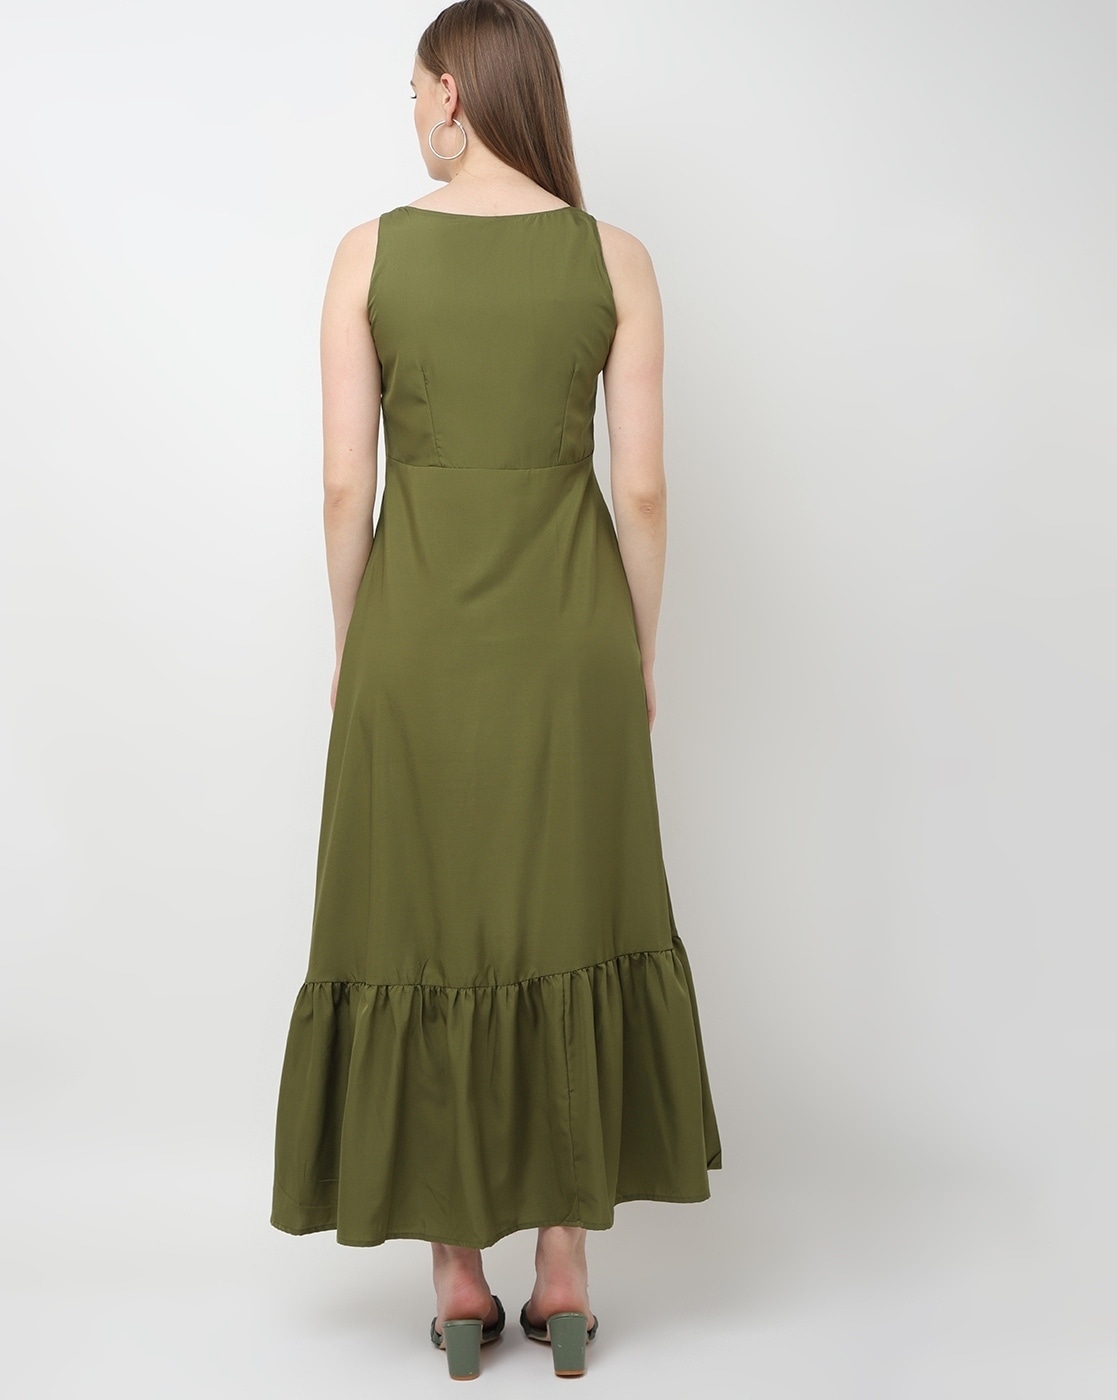 OOTD 8.9.18: Olive Green Dress